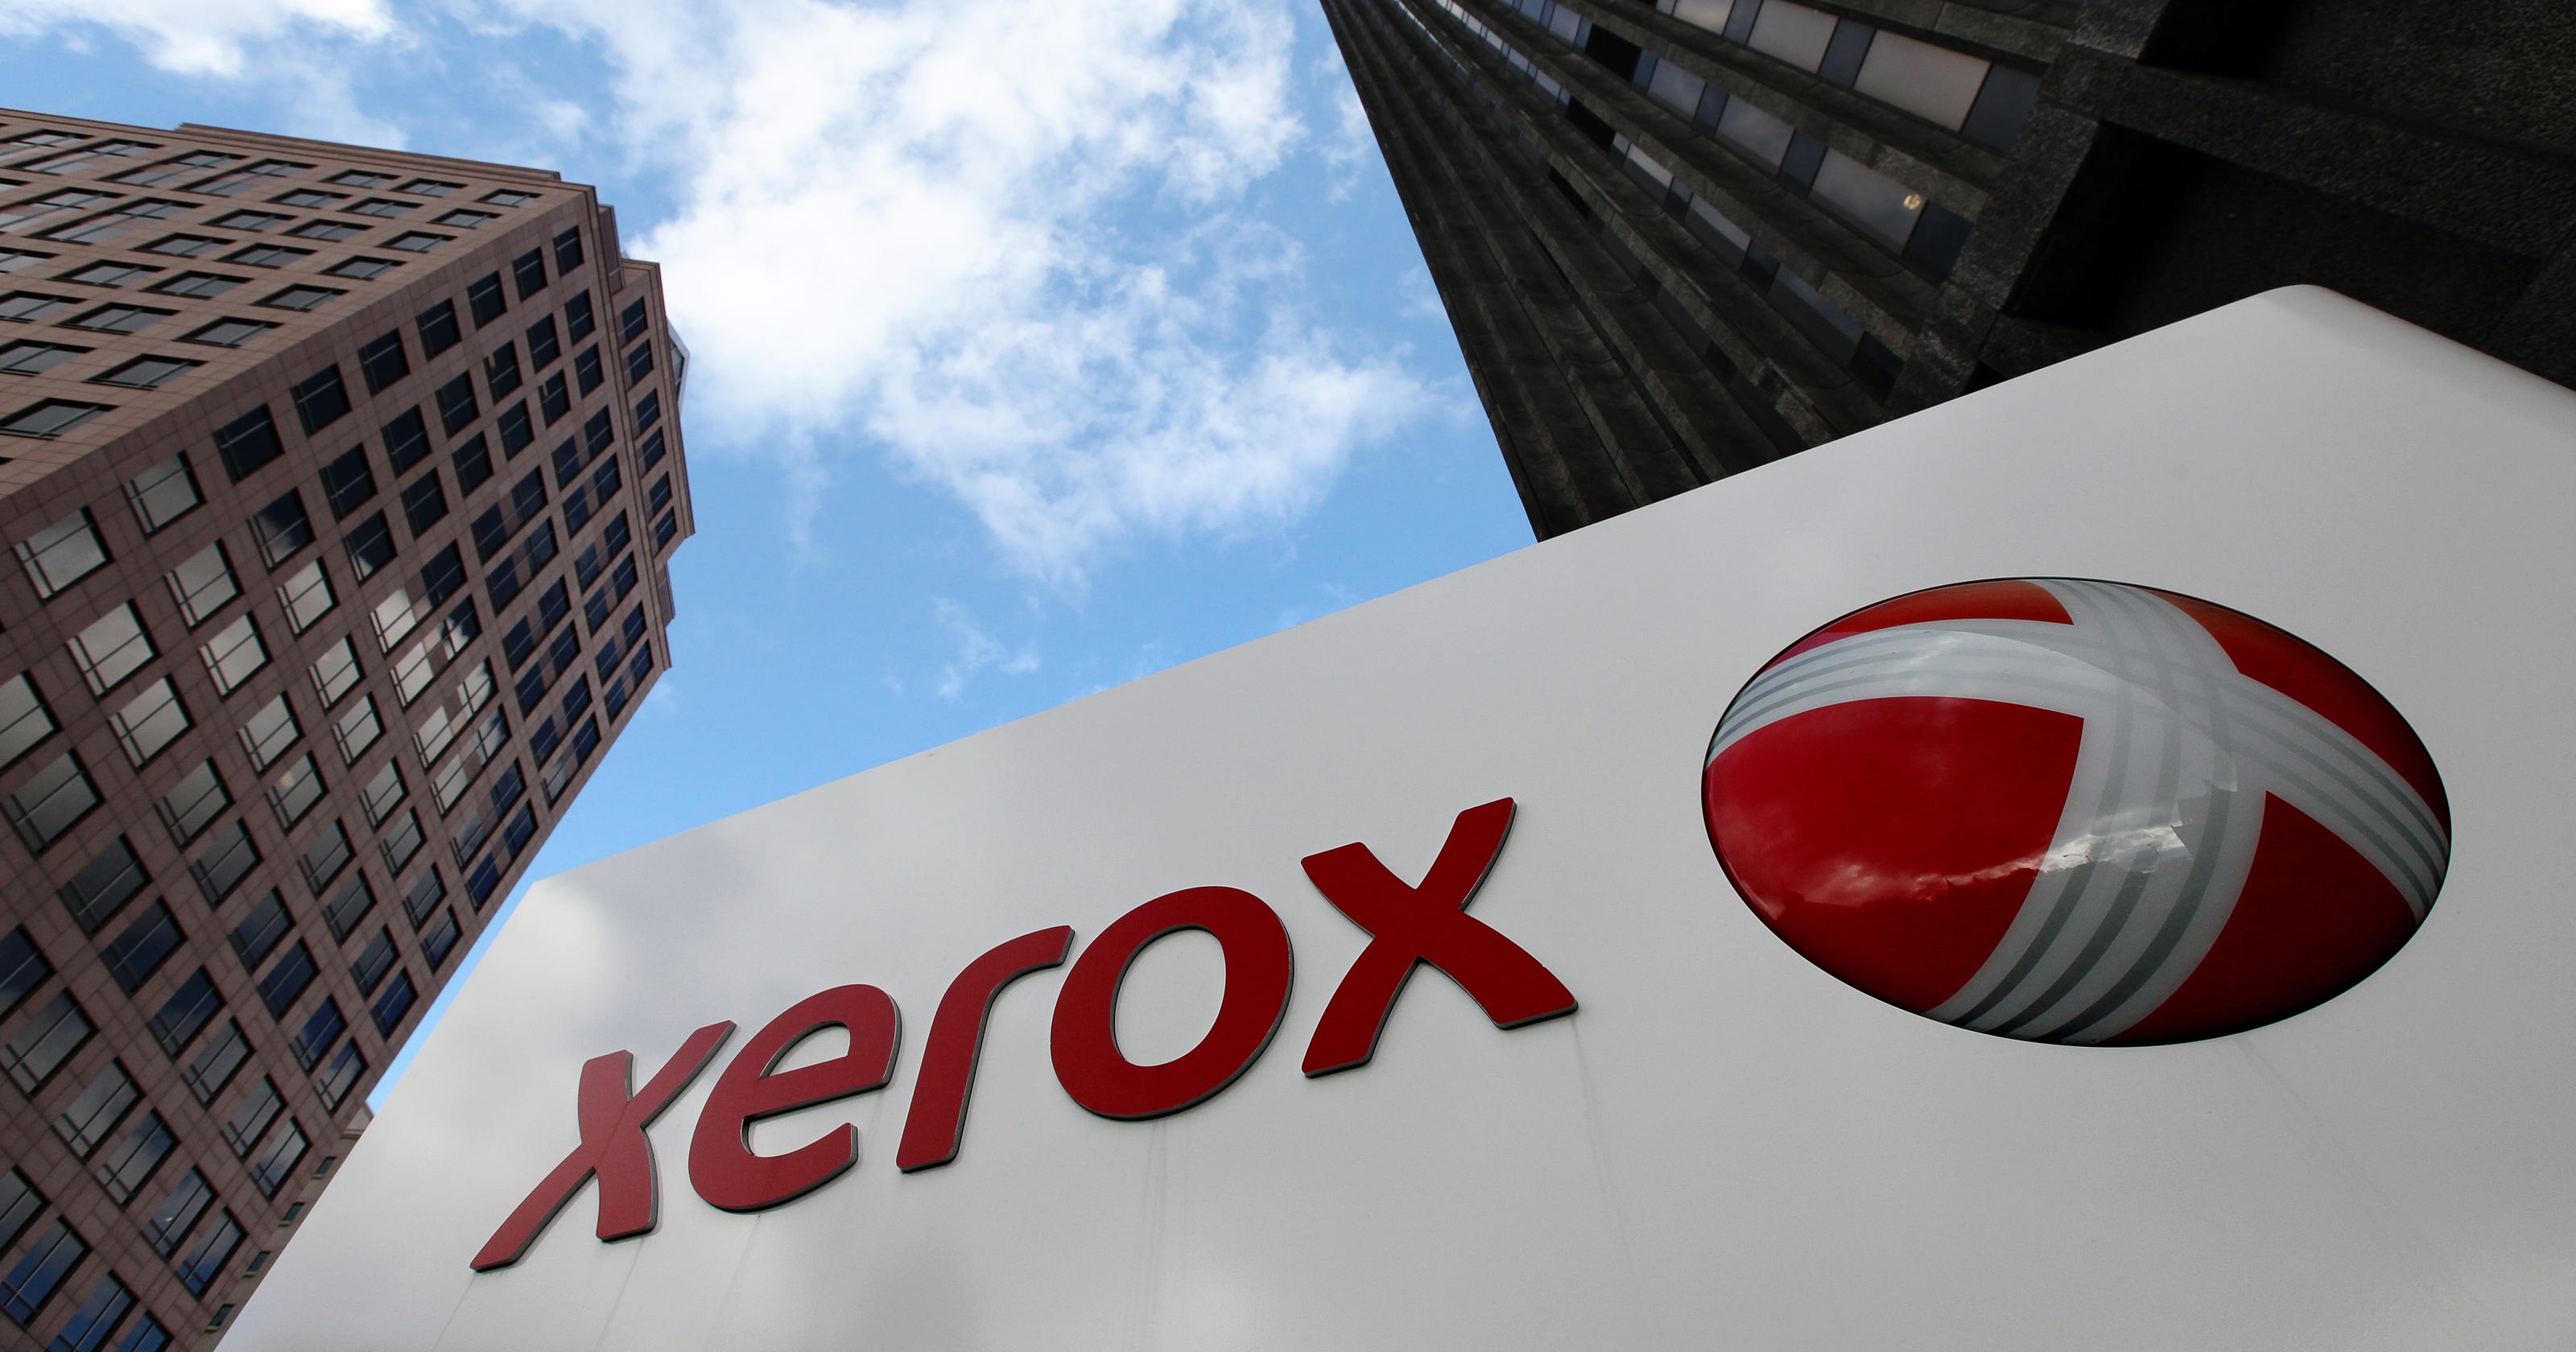  Xerox Meets With Investors In New York